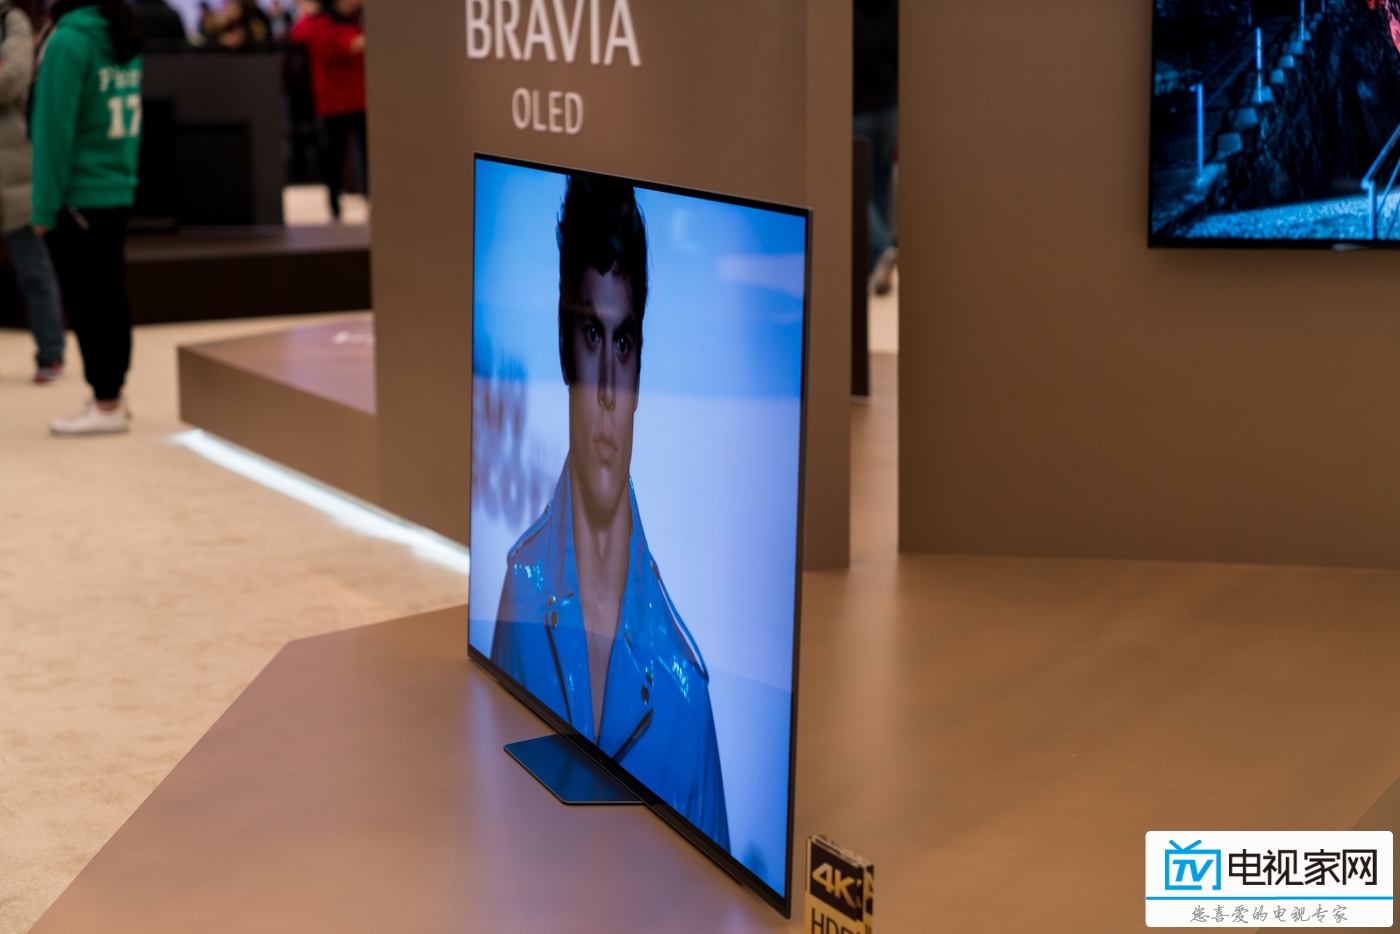 BRAVIA A8F,这是索尼在OELD电视市场投下的